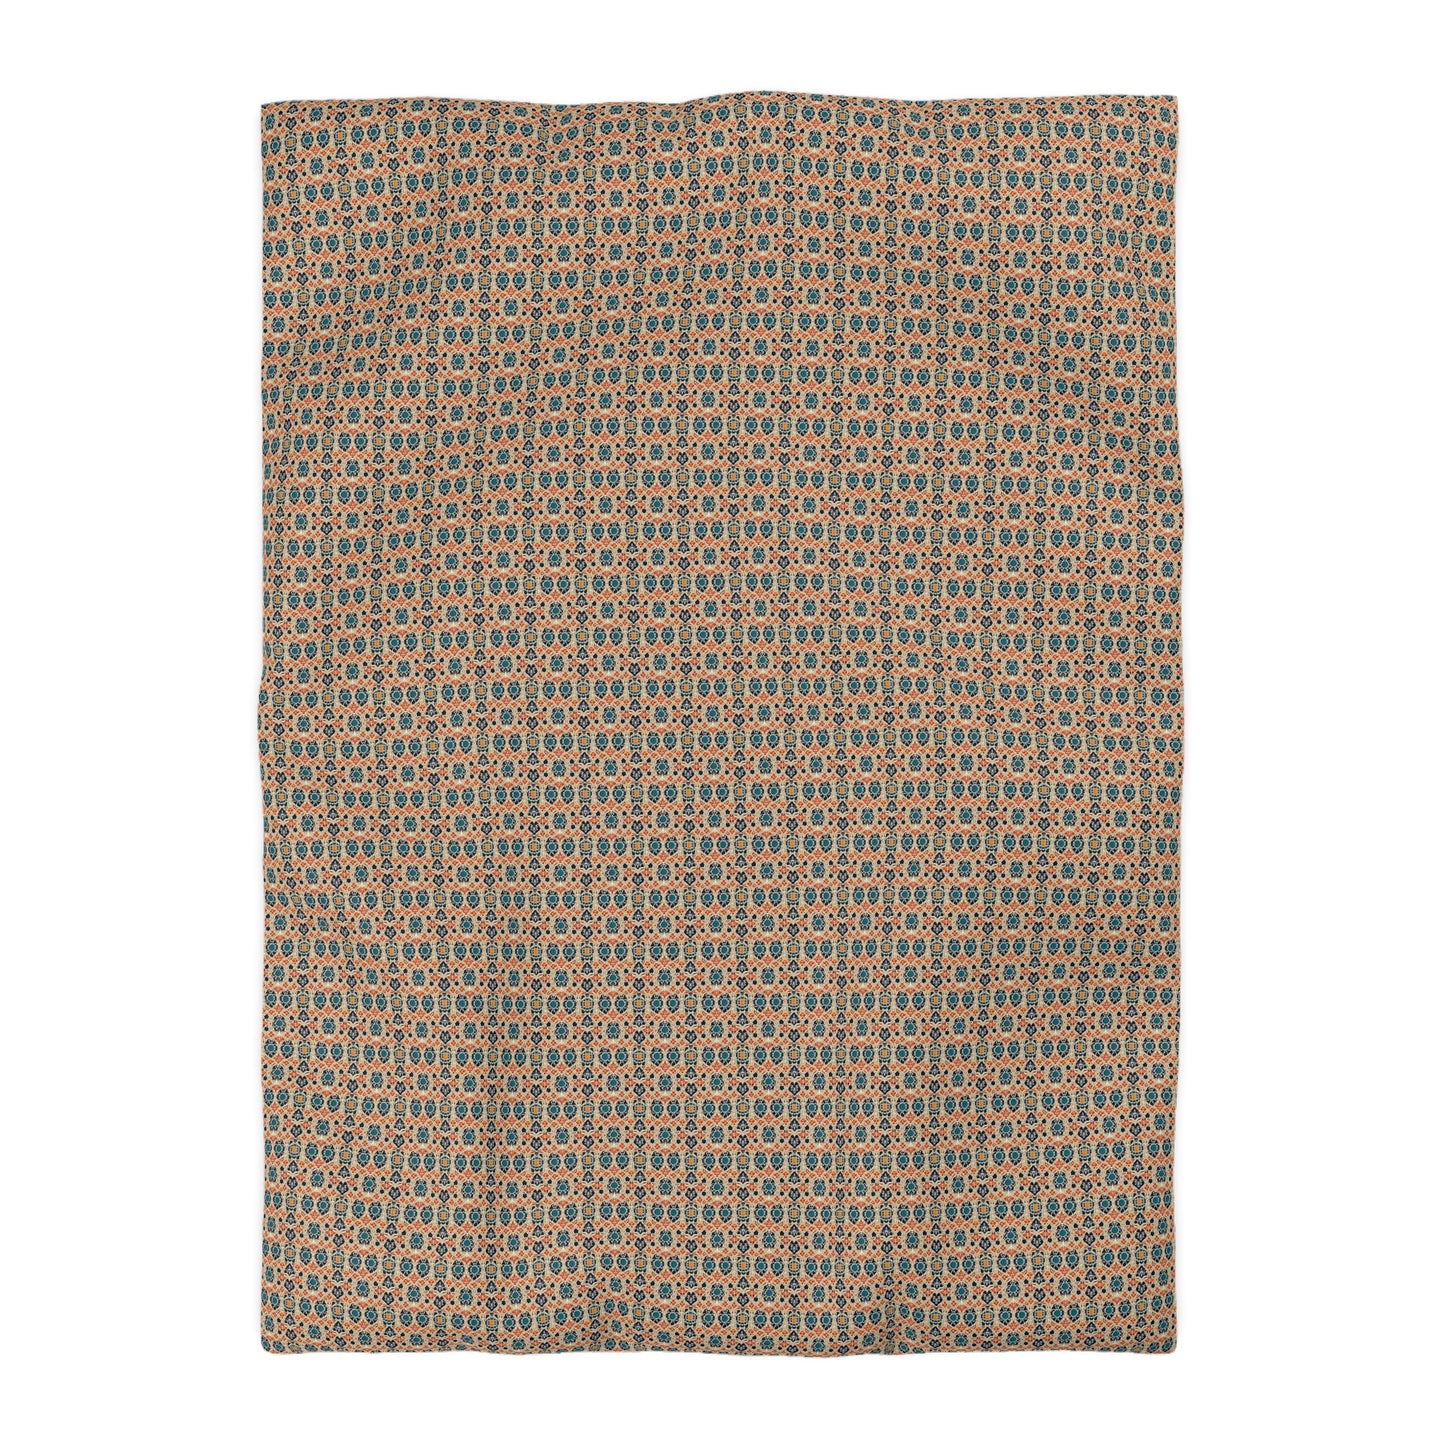 Morrocan Microfiber Duvet Cover